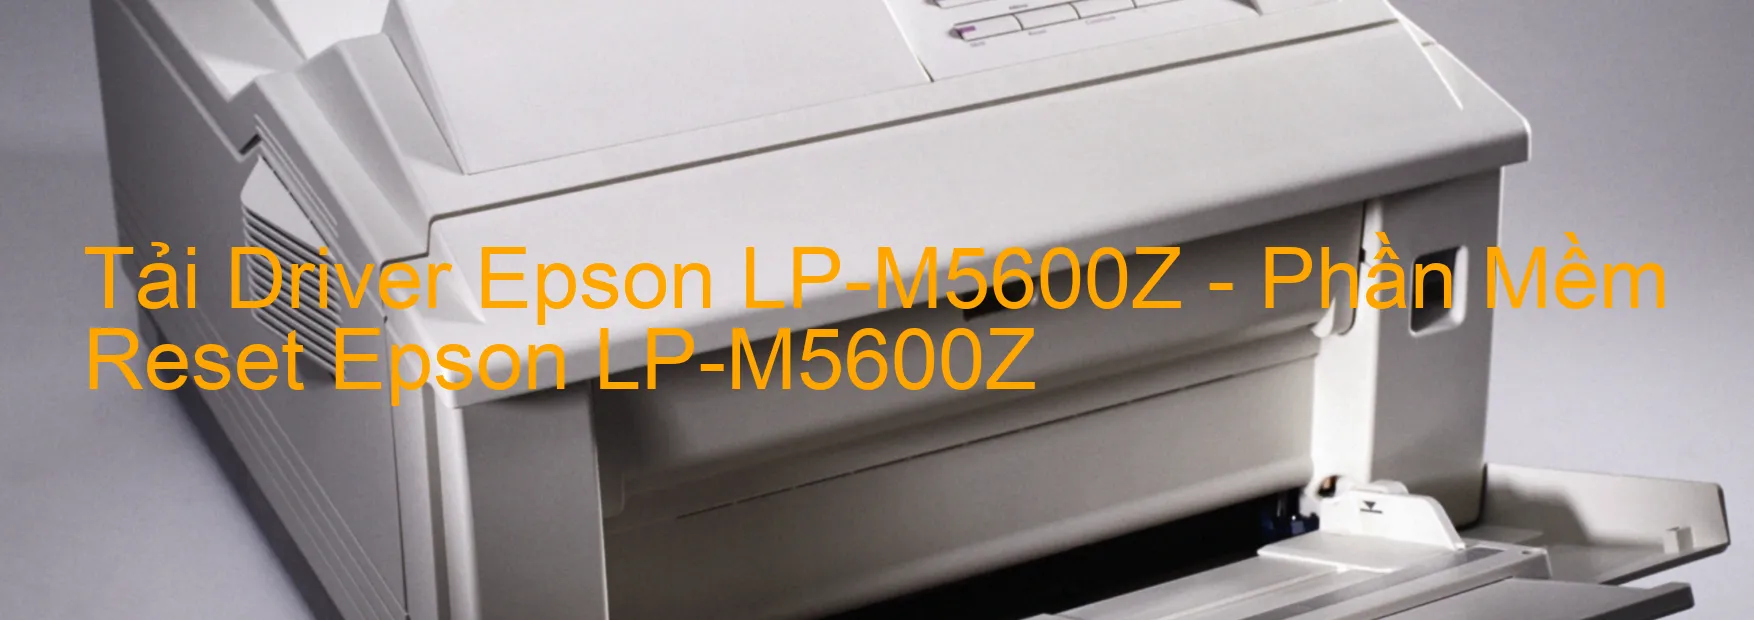 Driver Epson LP-M5600Z, Phần Mềm Reset Epson LP-M5600Z